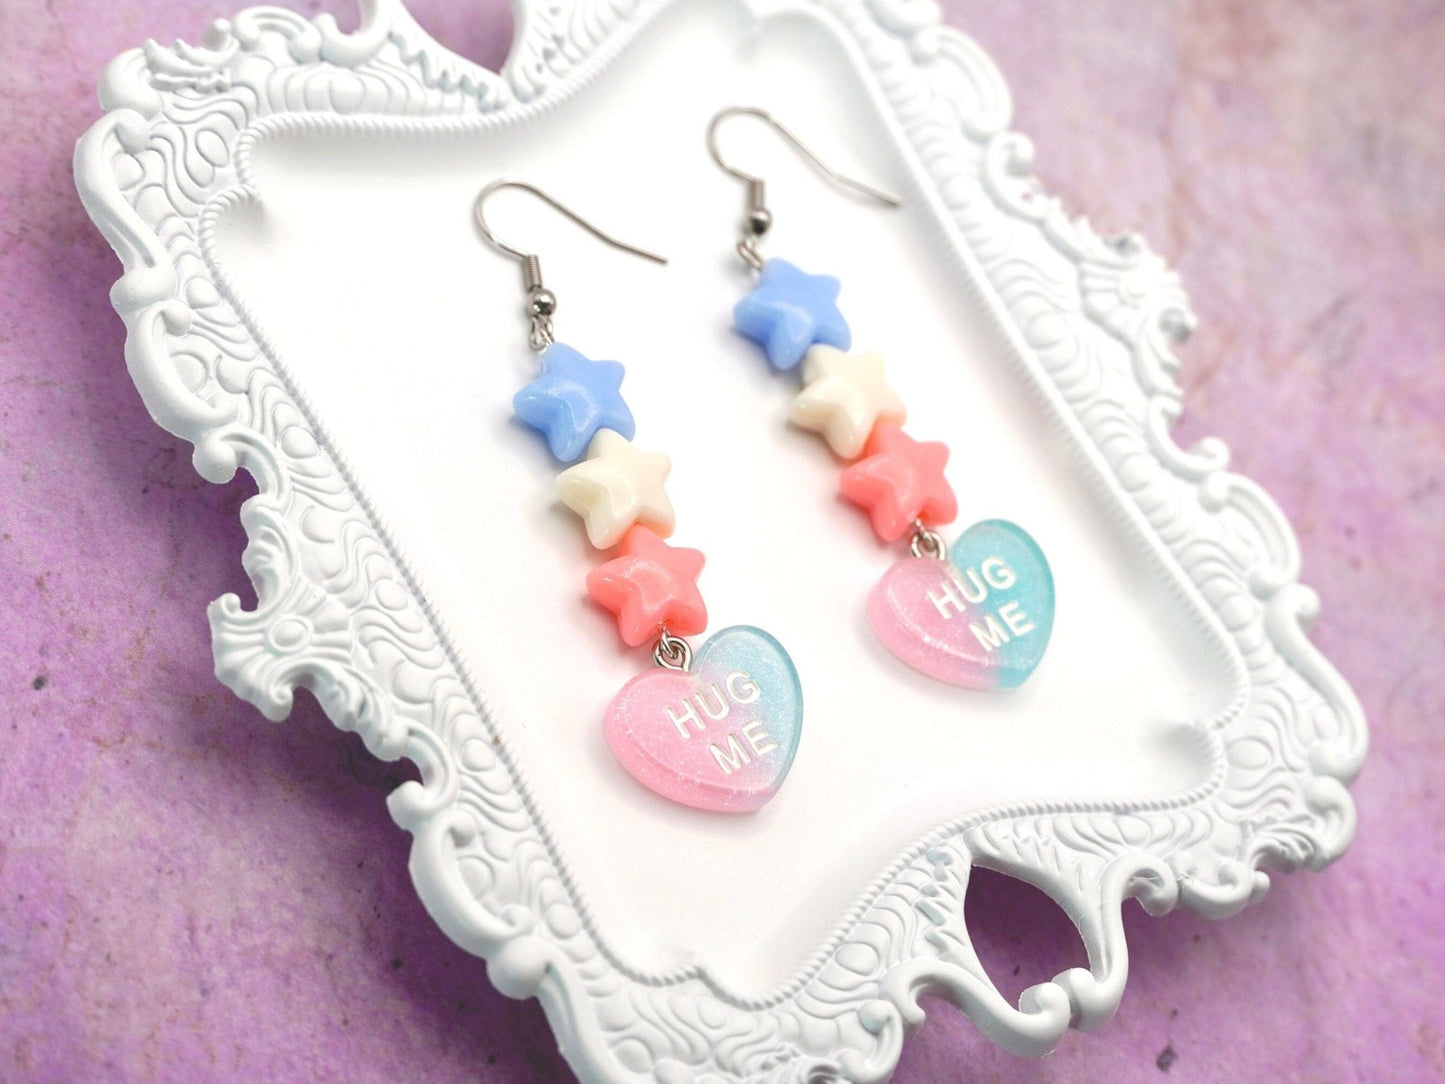 Hug Me Heart Earrings, Trans Pride Earrings, Trans Flag Colored Earrings with Star Beads - Dekowaii Jewelry Company